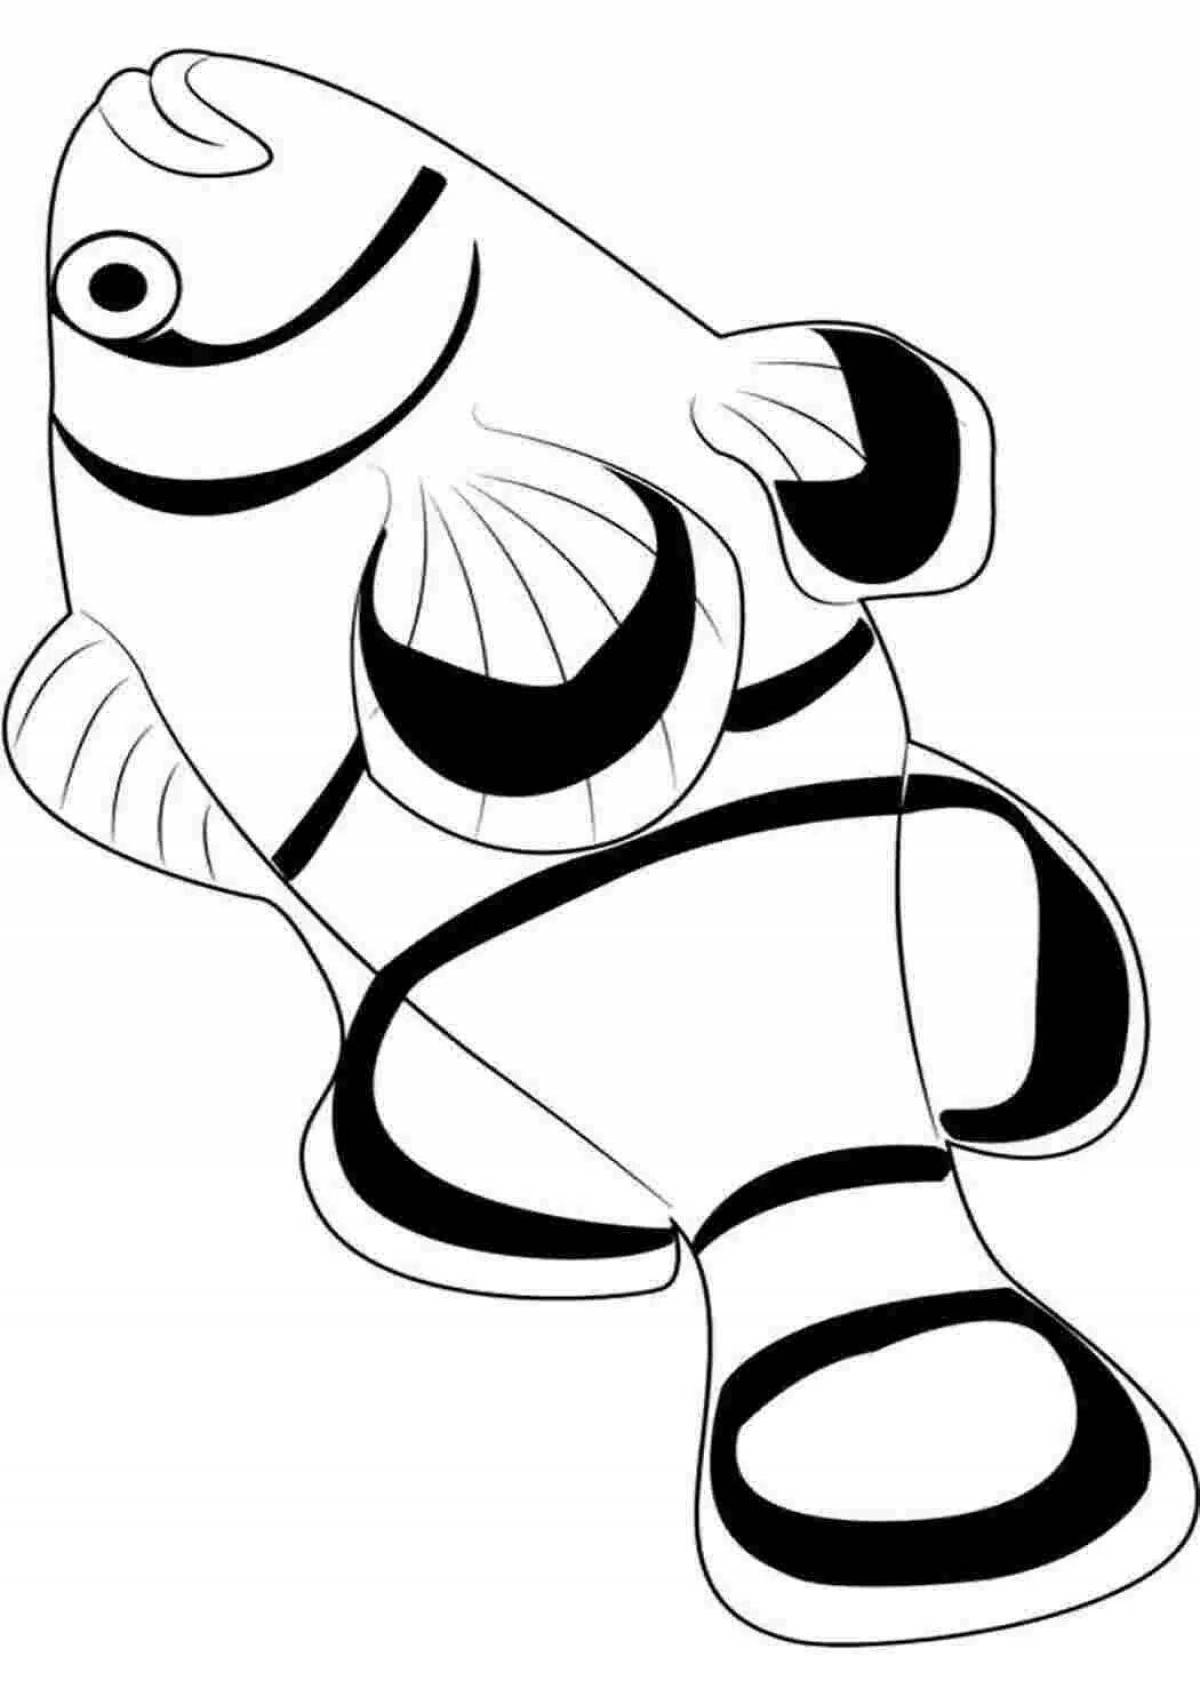 Bright drawing of a clown fish